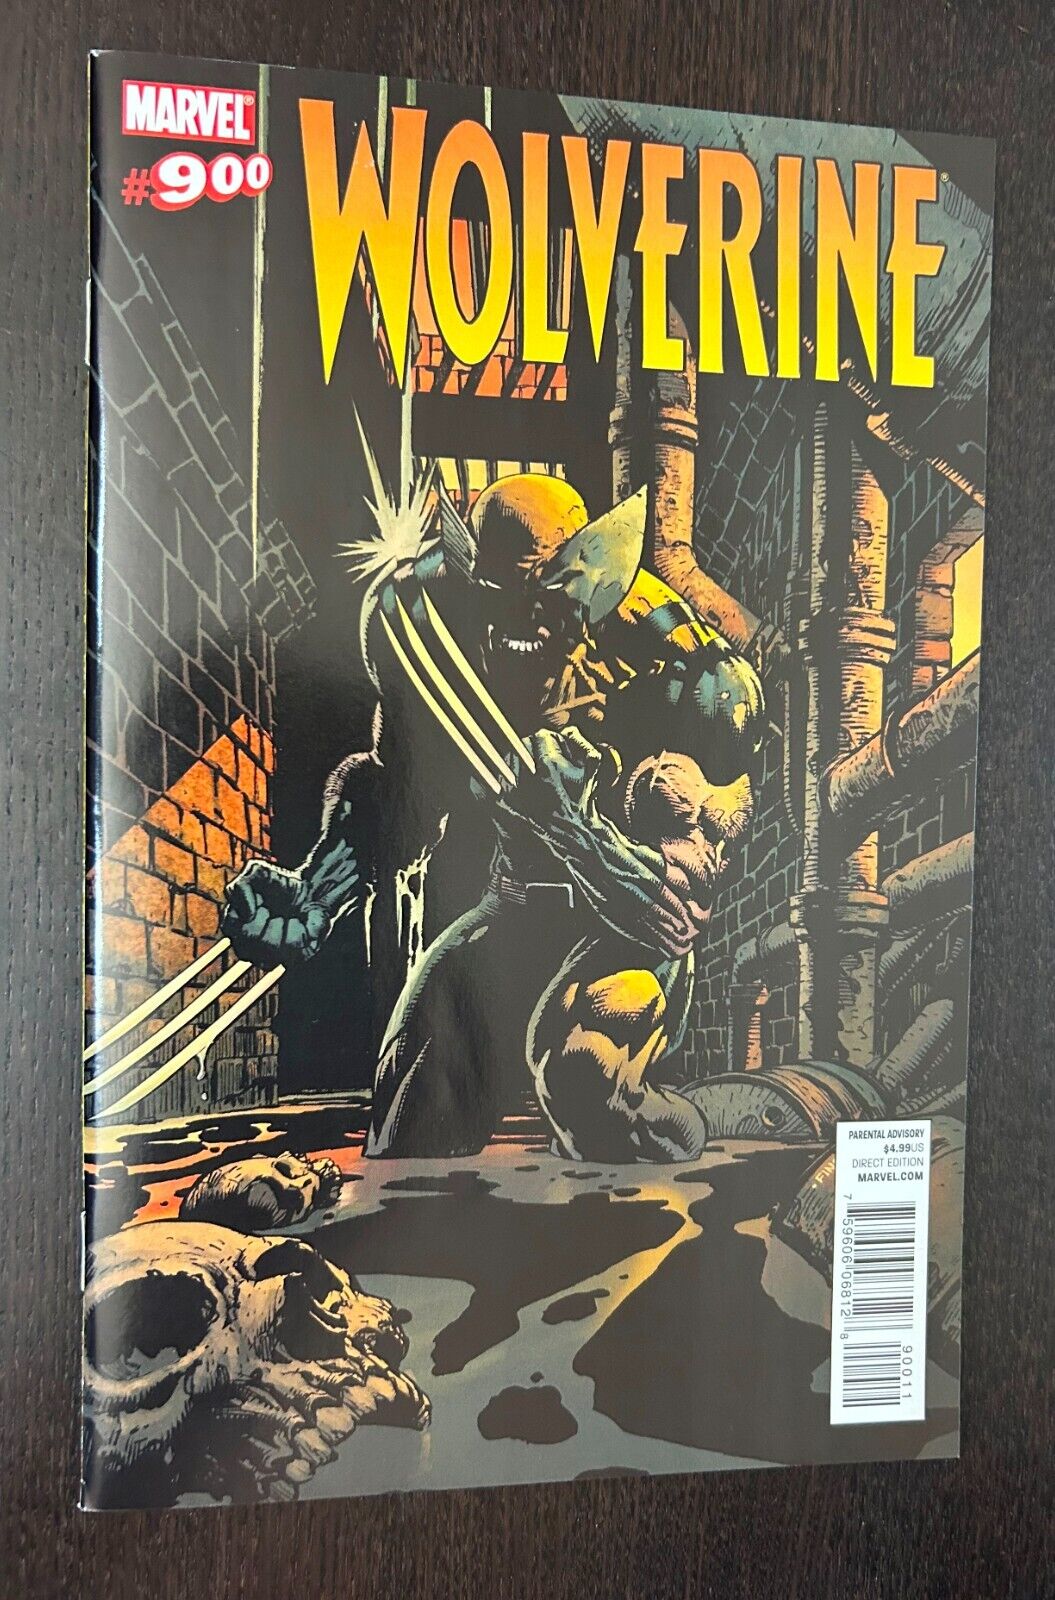 WOLVERINE #900 (Marvel Comics 2010) -- NM- Or Better